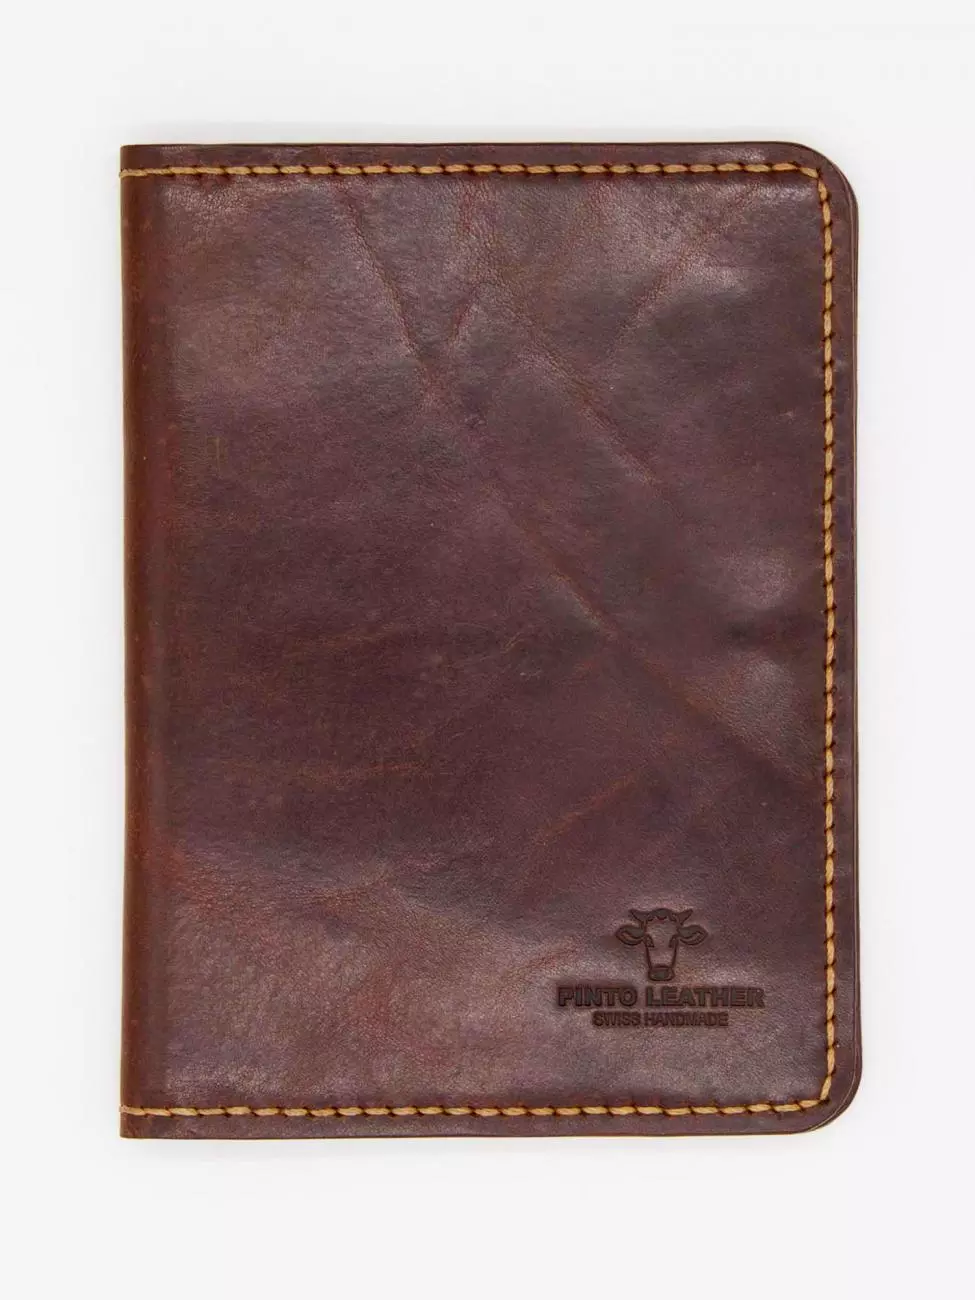 2 - Leather document holder